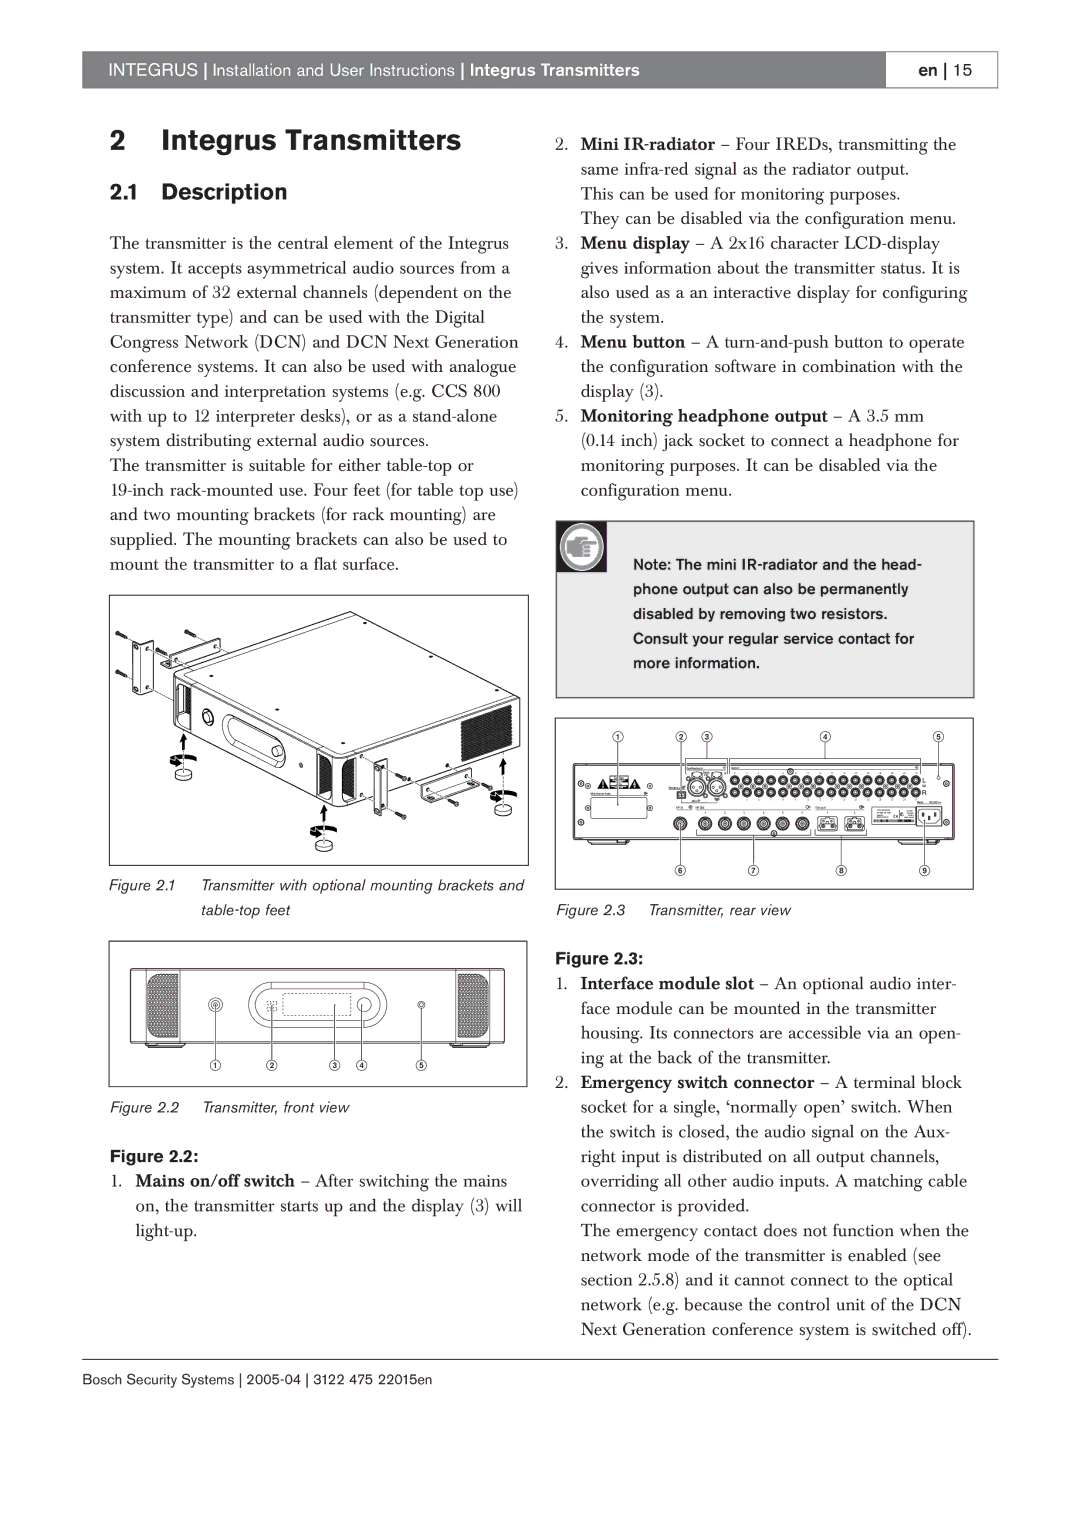 Bosch Appliances 3122 475 22015en manual Integrus Transmitters, Description 